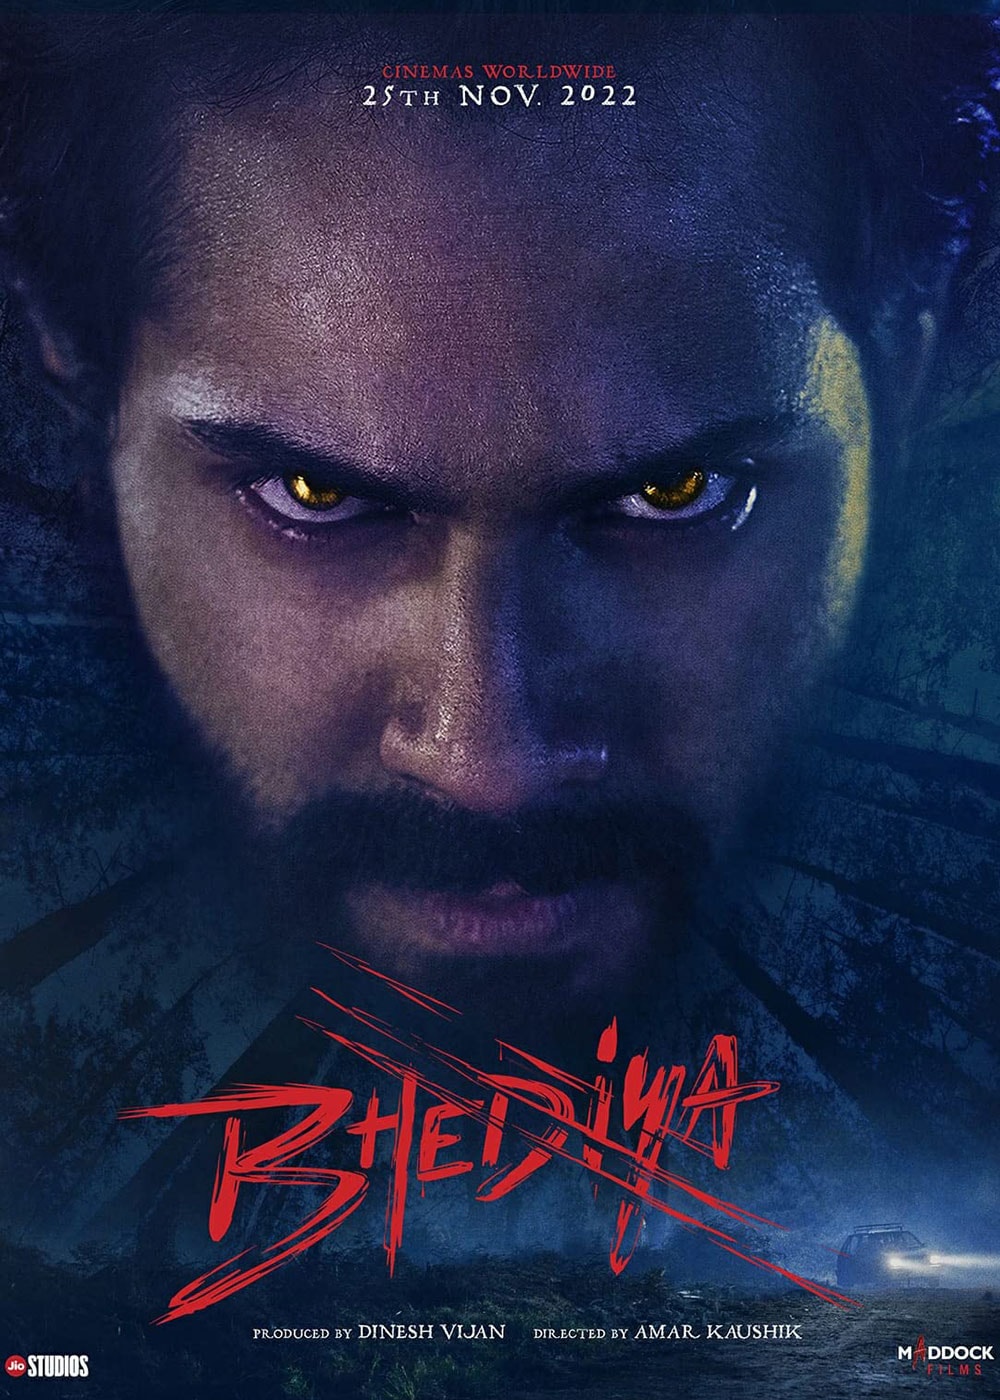 Bhediya Movie (2022) Release Date, Review, Cast, Trailer, Watch